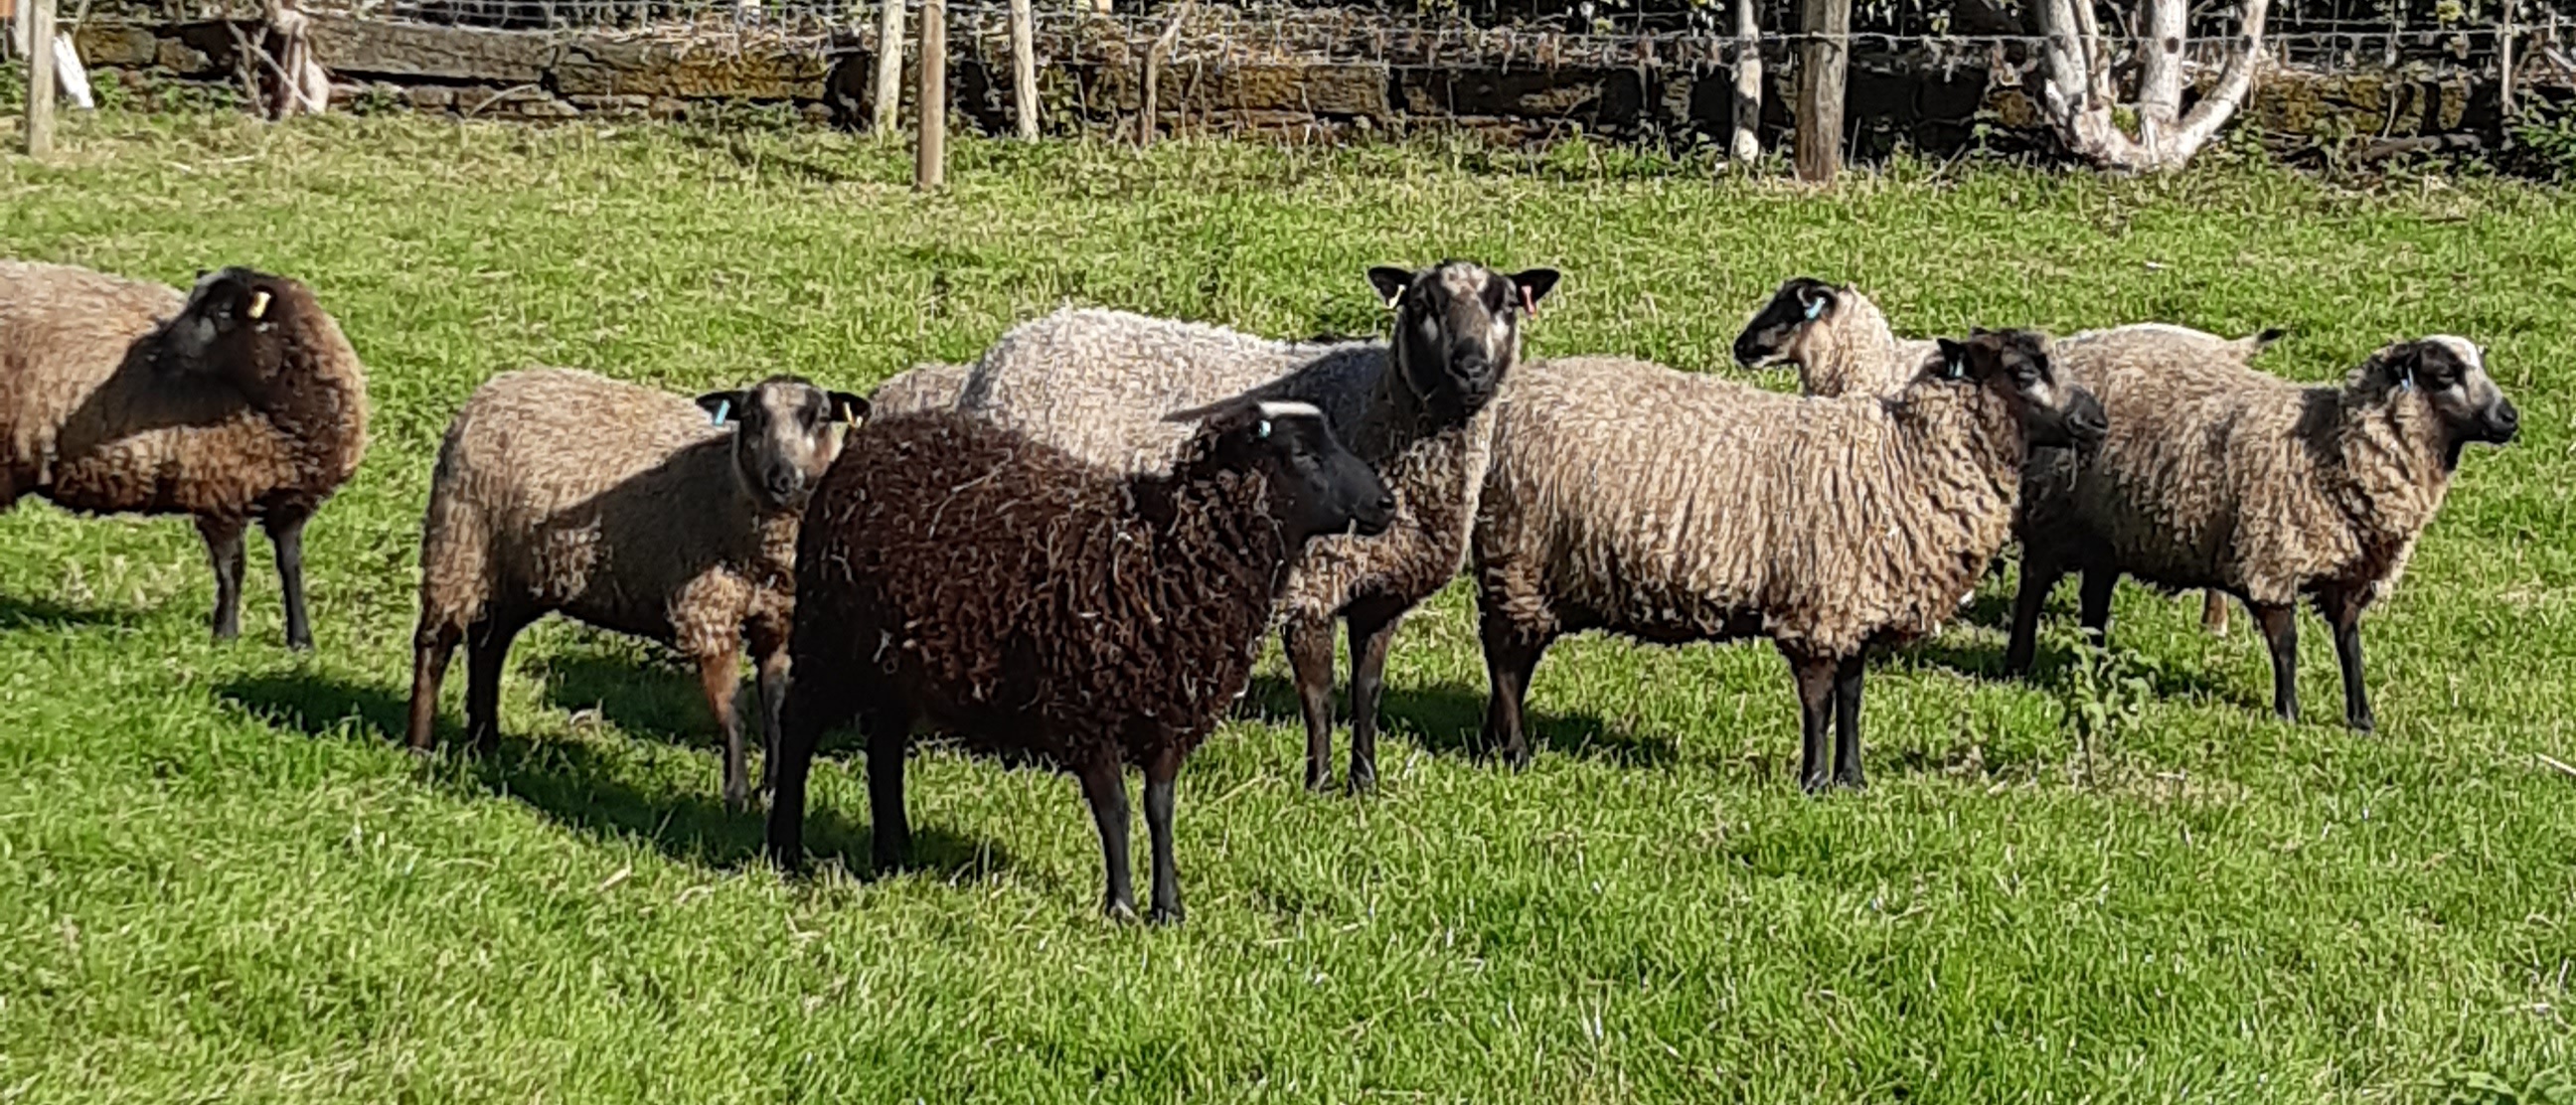 Pineview Shetland sheep image 3